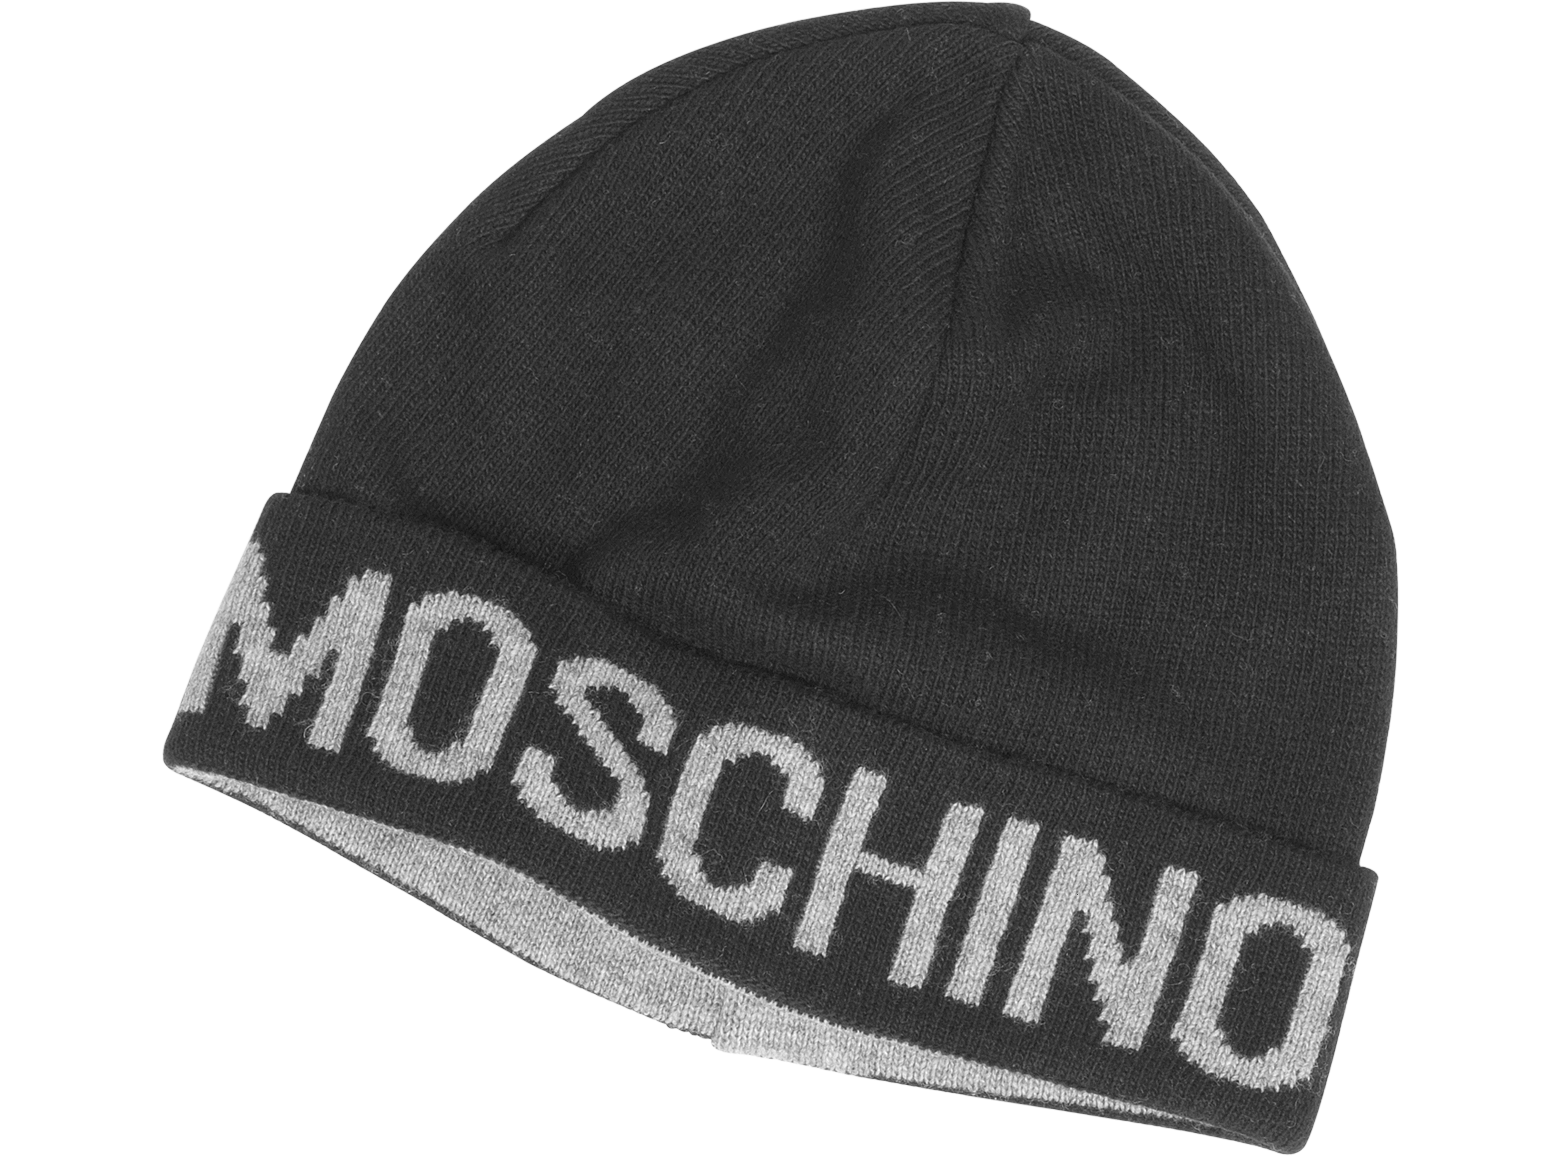 moschino wool hat